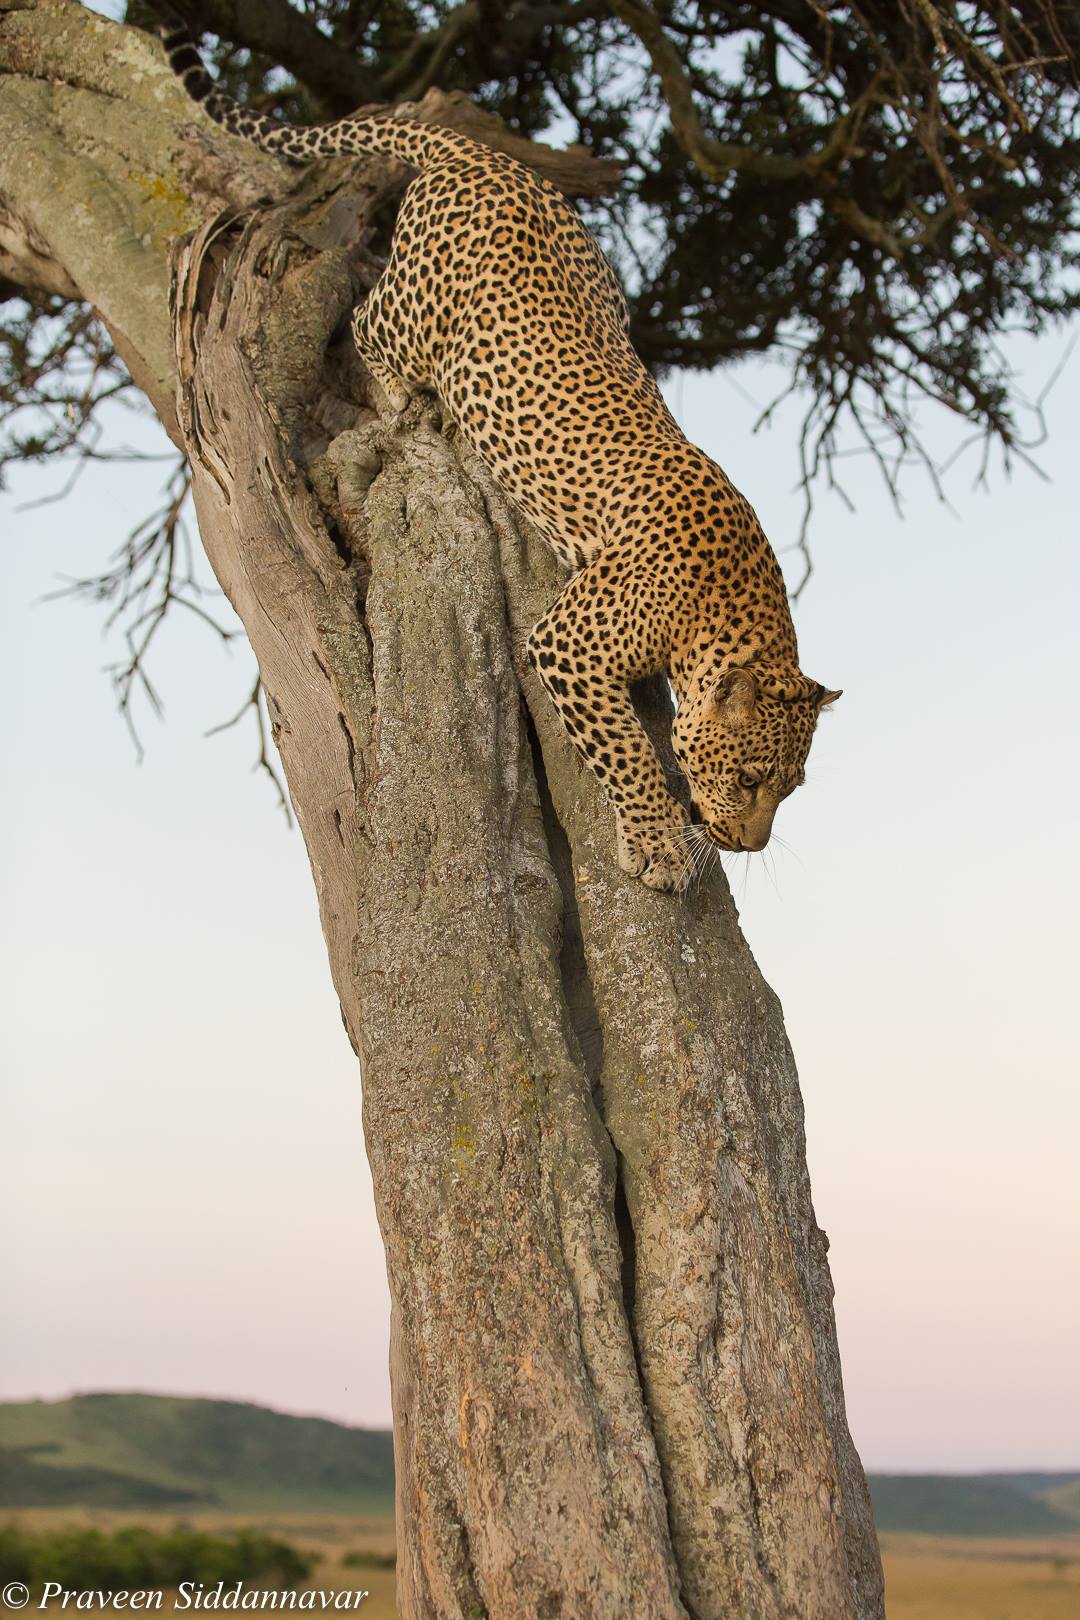 African Leopard captured from Kenya, Africa by Praveen Siddannavar